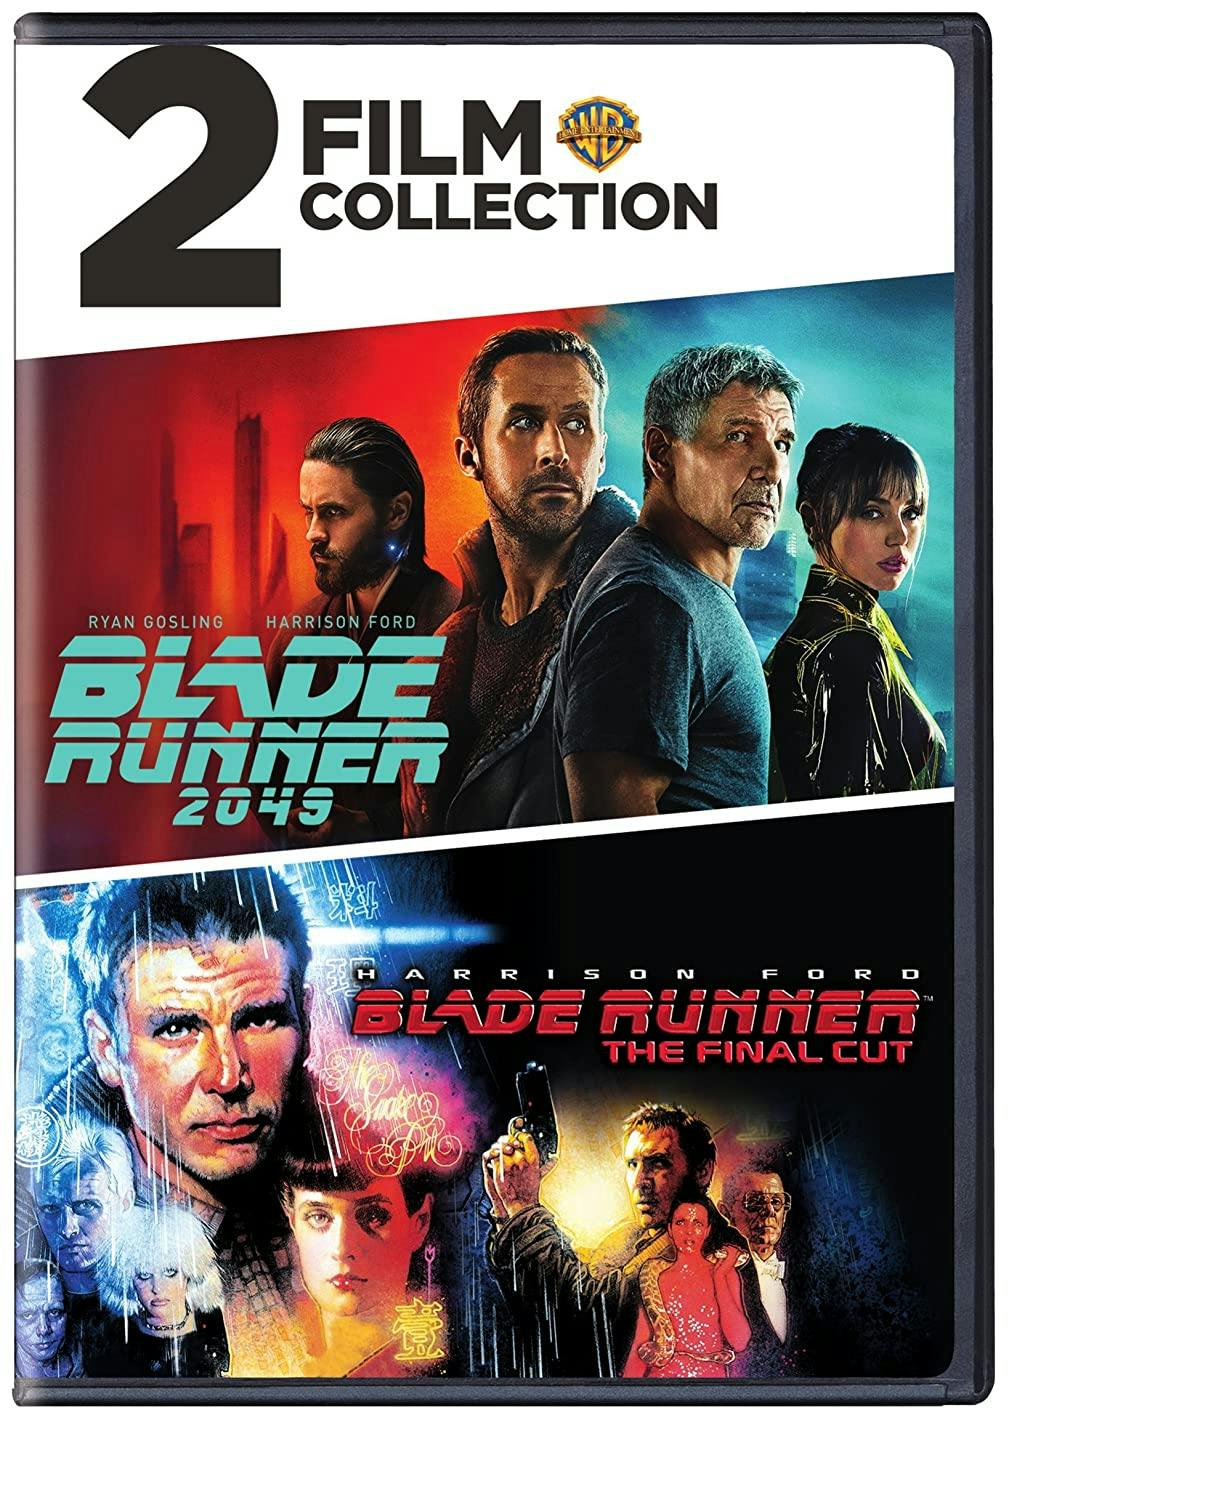 Buy Blade Runner: The Final Cut/Blade Runner 2049 DVD Double